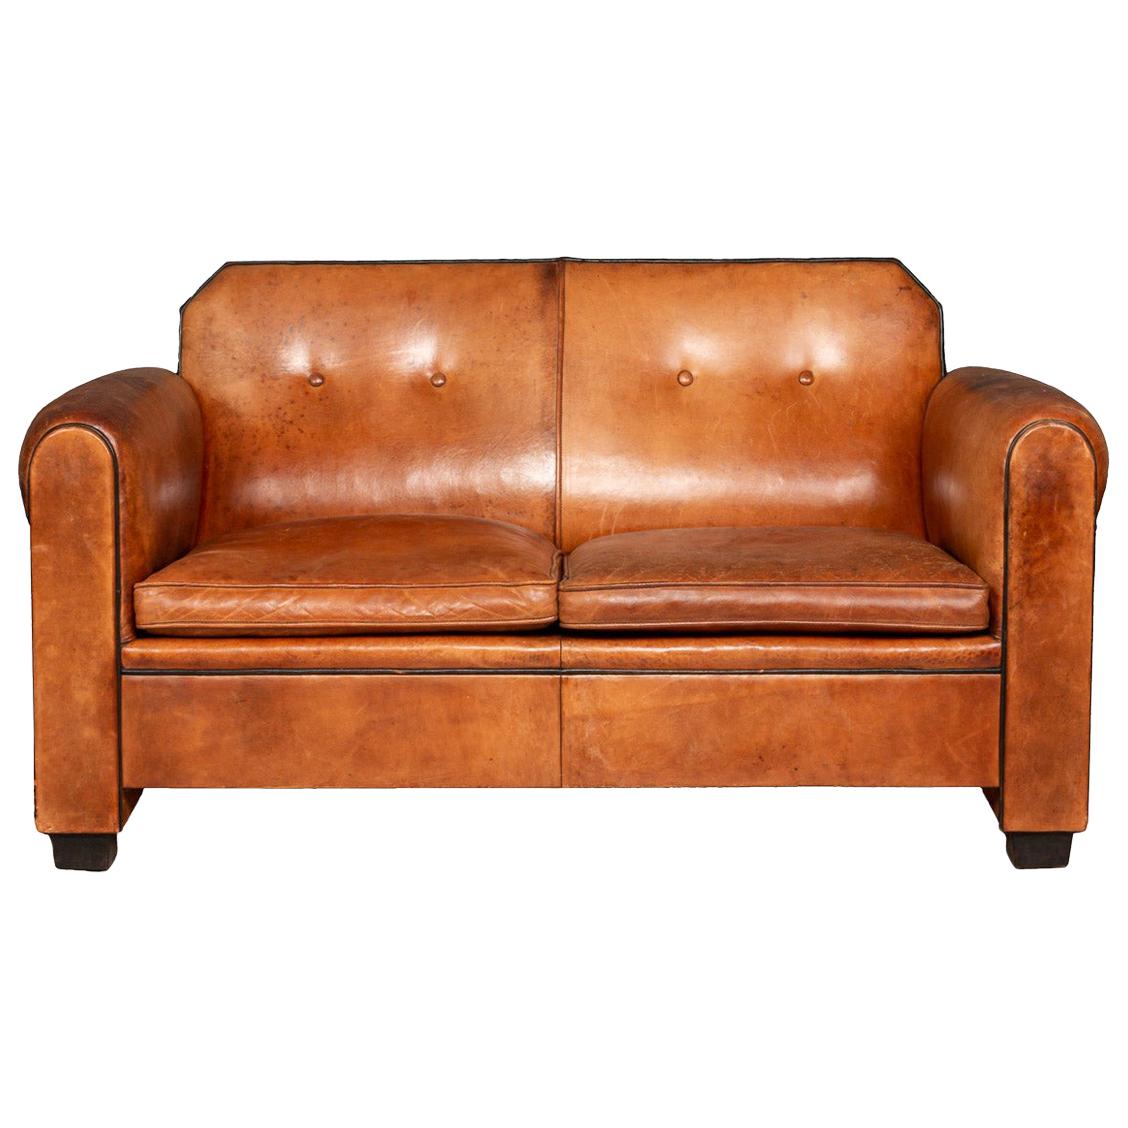 Elegant 20th Century Dutch Two-Seat Tan Leather Sofa For Sale